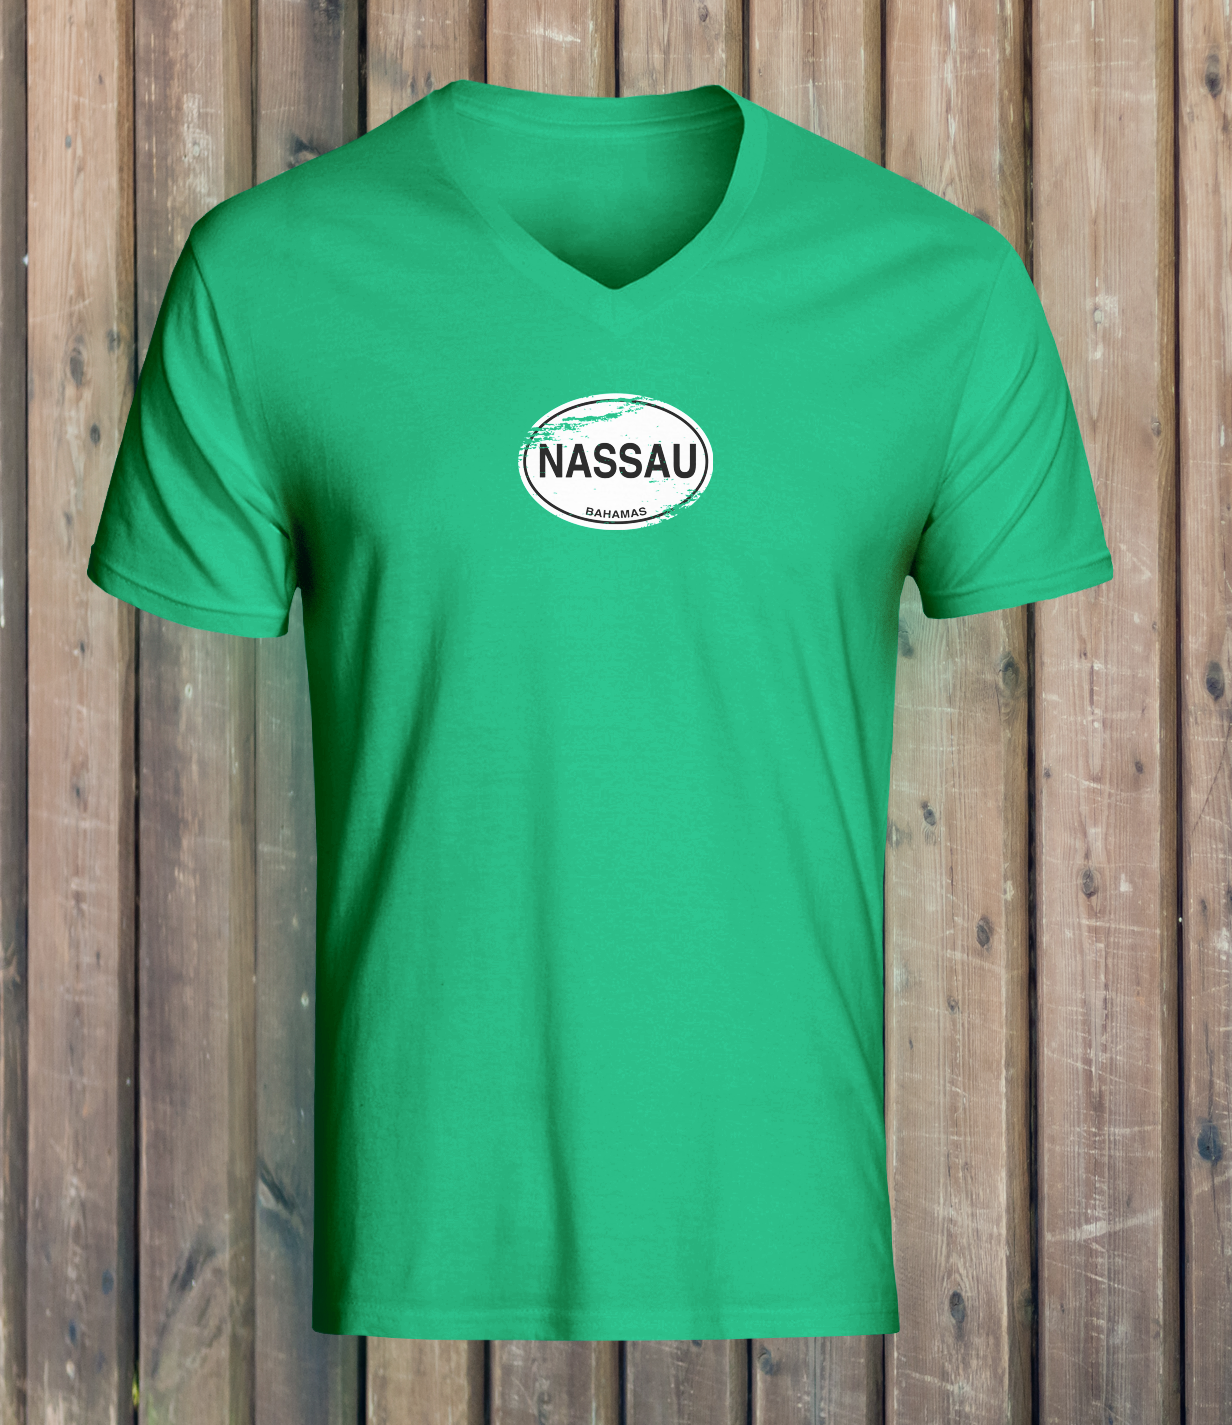 Nassau Bahamas Women's Classic V-Neck T-Shirts - My Destination Location